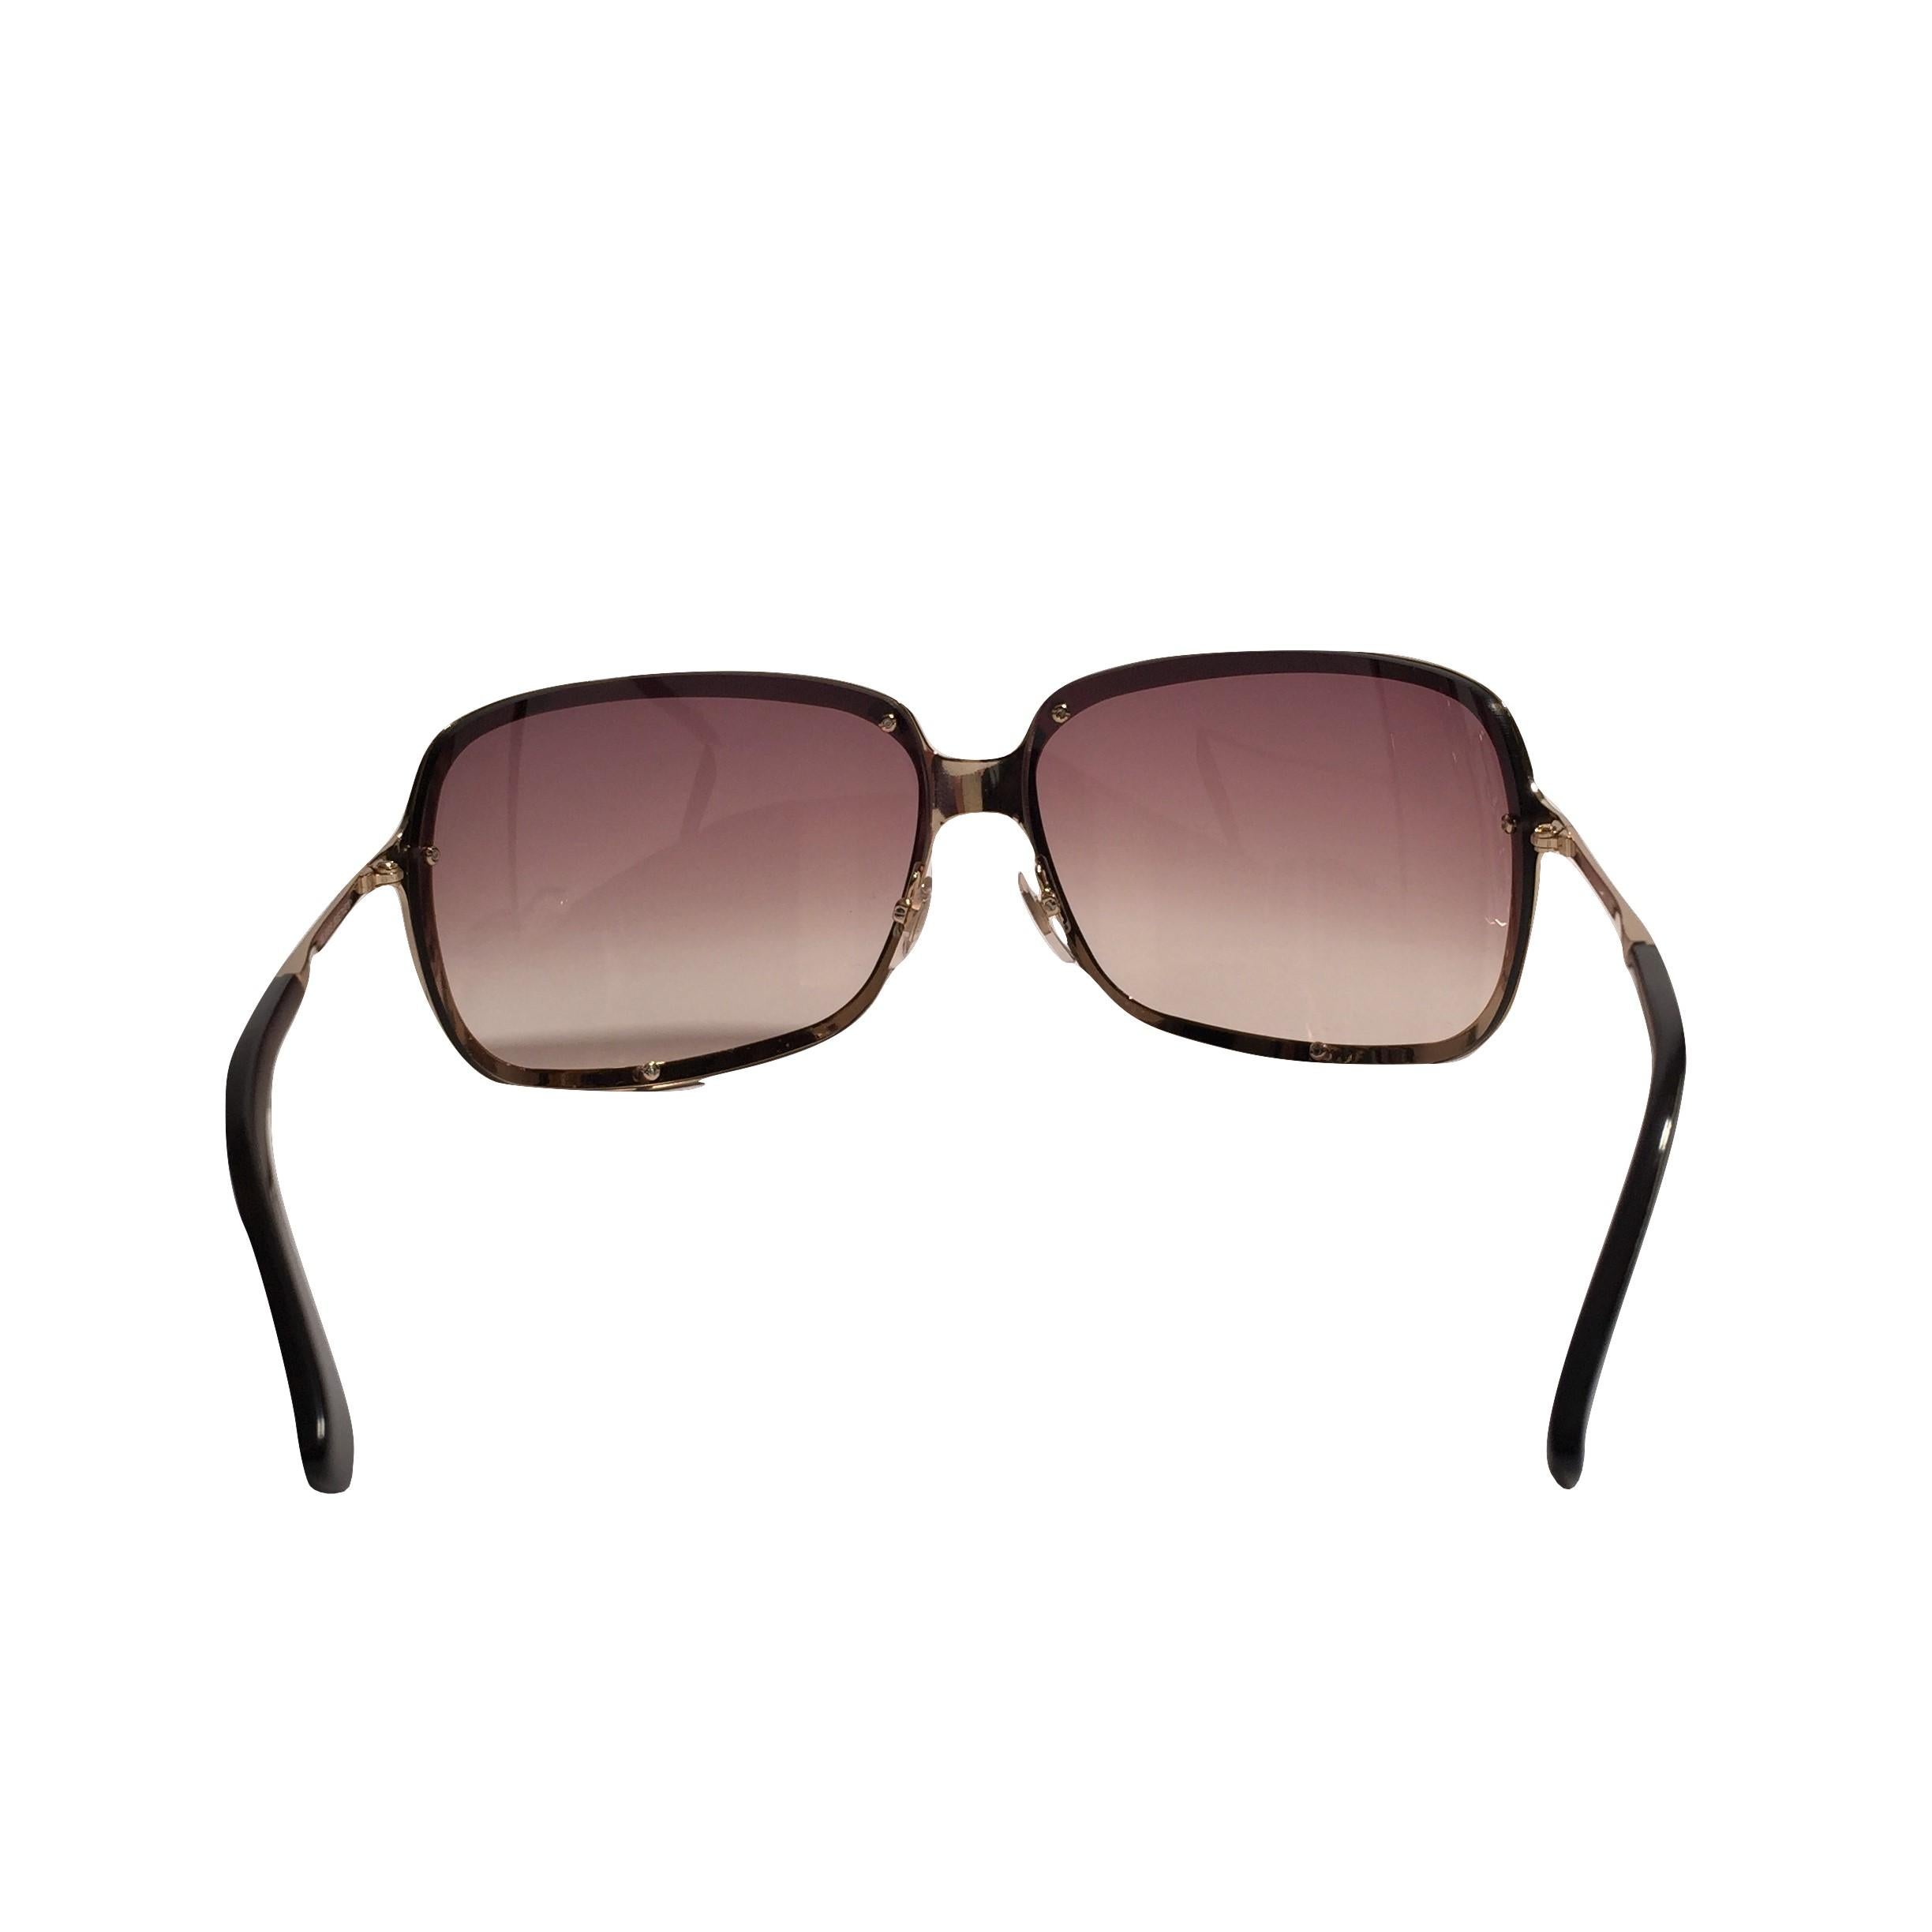 New Yves Saint Laurent YSL Gold Wrap Sunglasses W/ Case 5